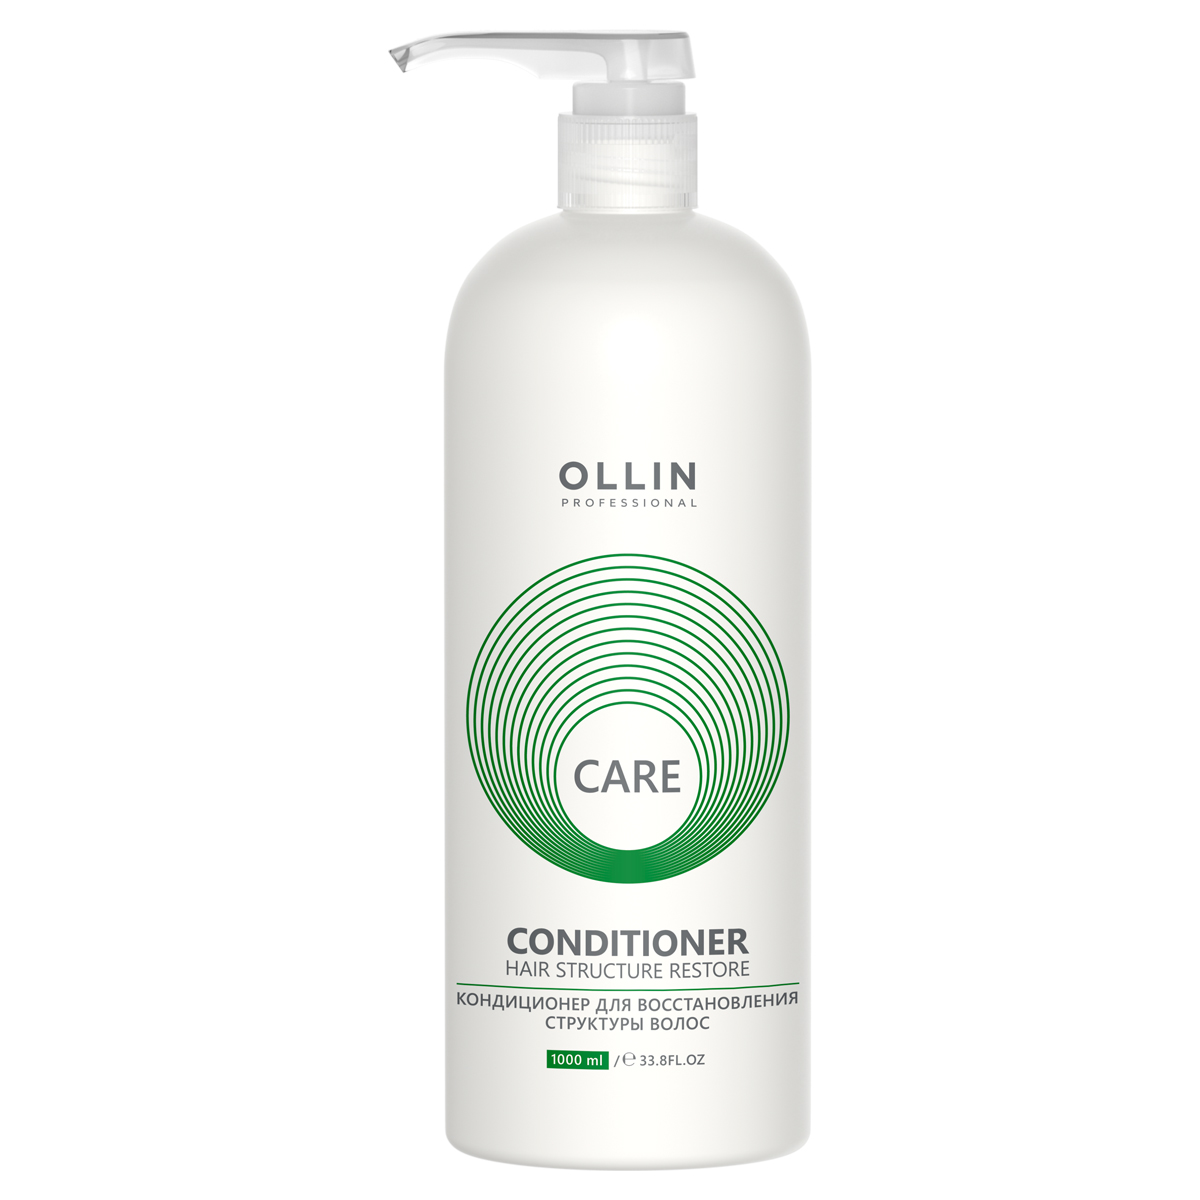 Ollin Professional Кондиционер для восстановления структуры волос, 1000 мл (Ollin Professional, Care) цена и фото